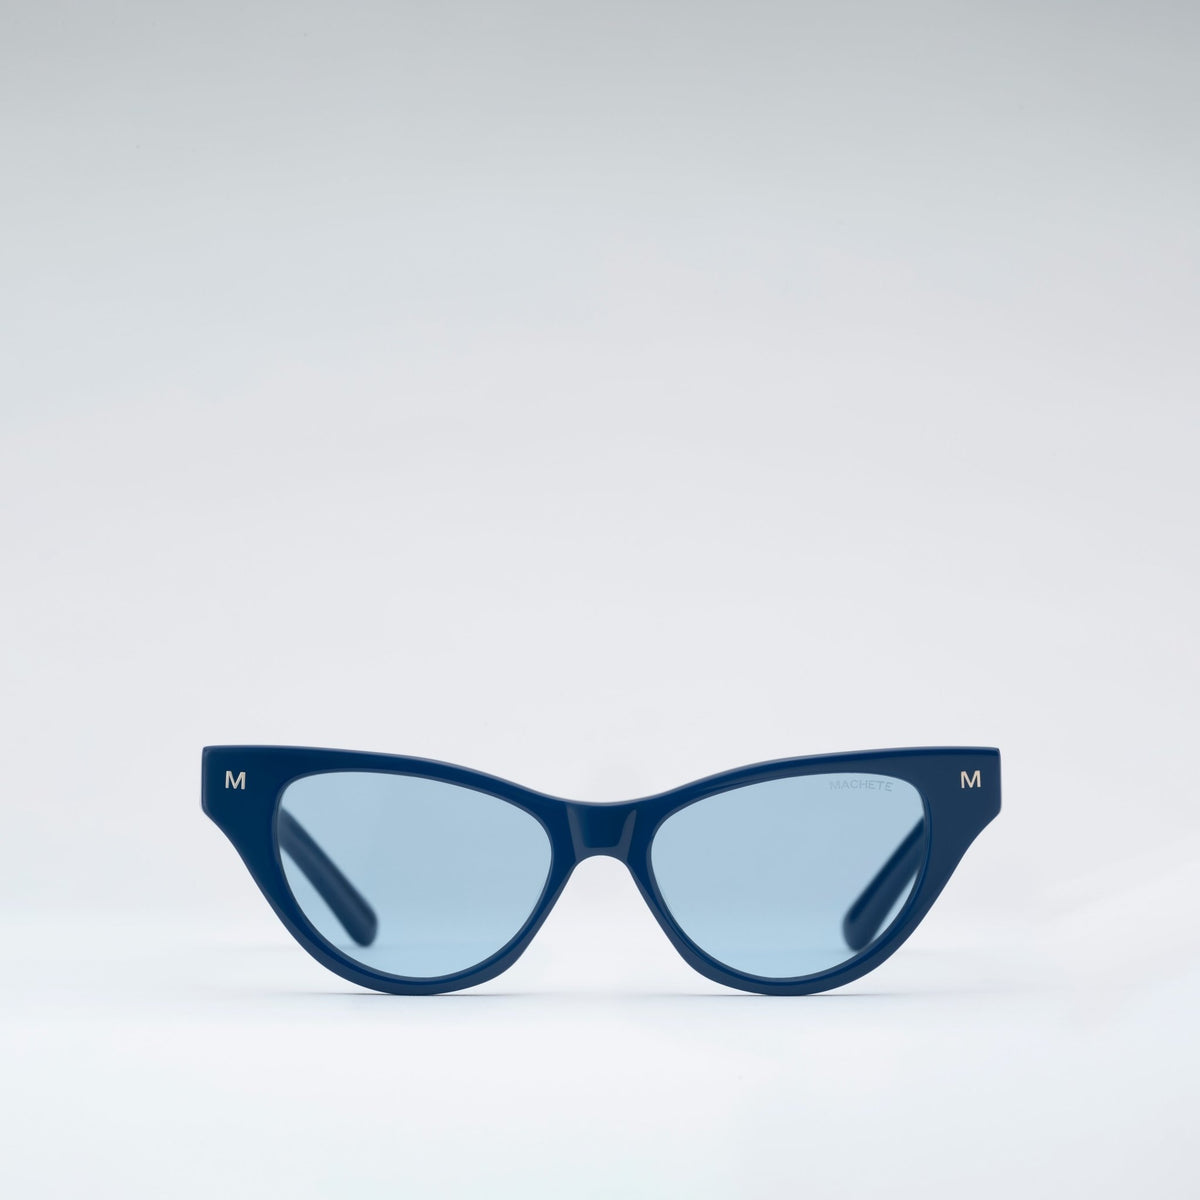 MACHETE Suzy Sunglasses in Parisian Blue